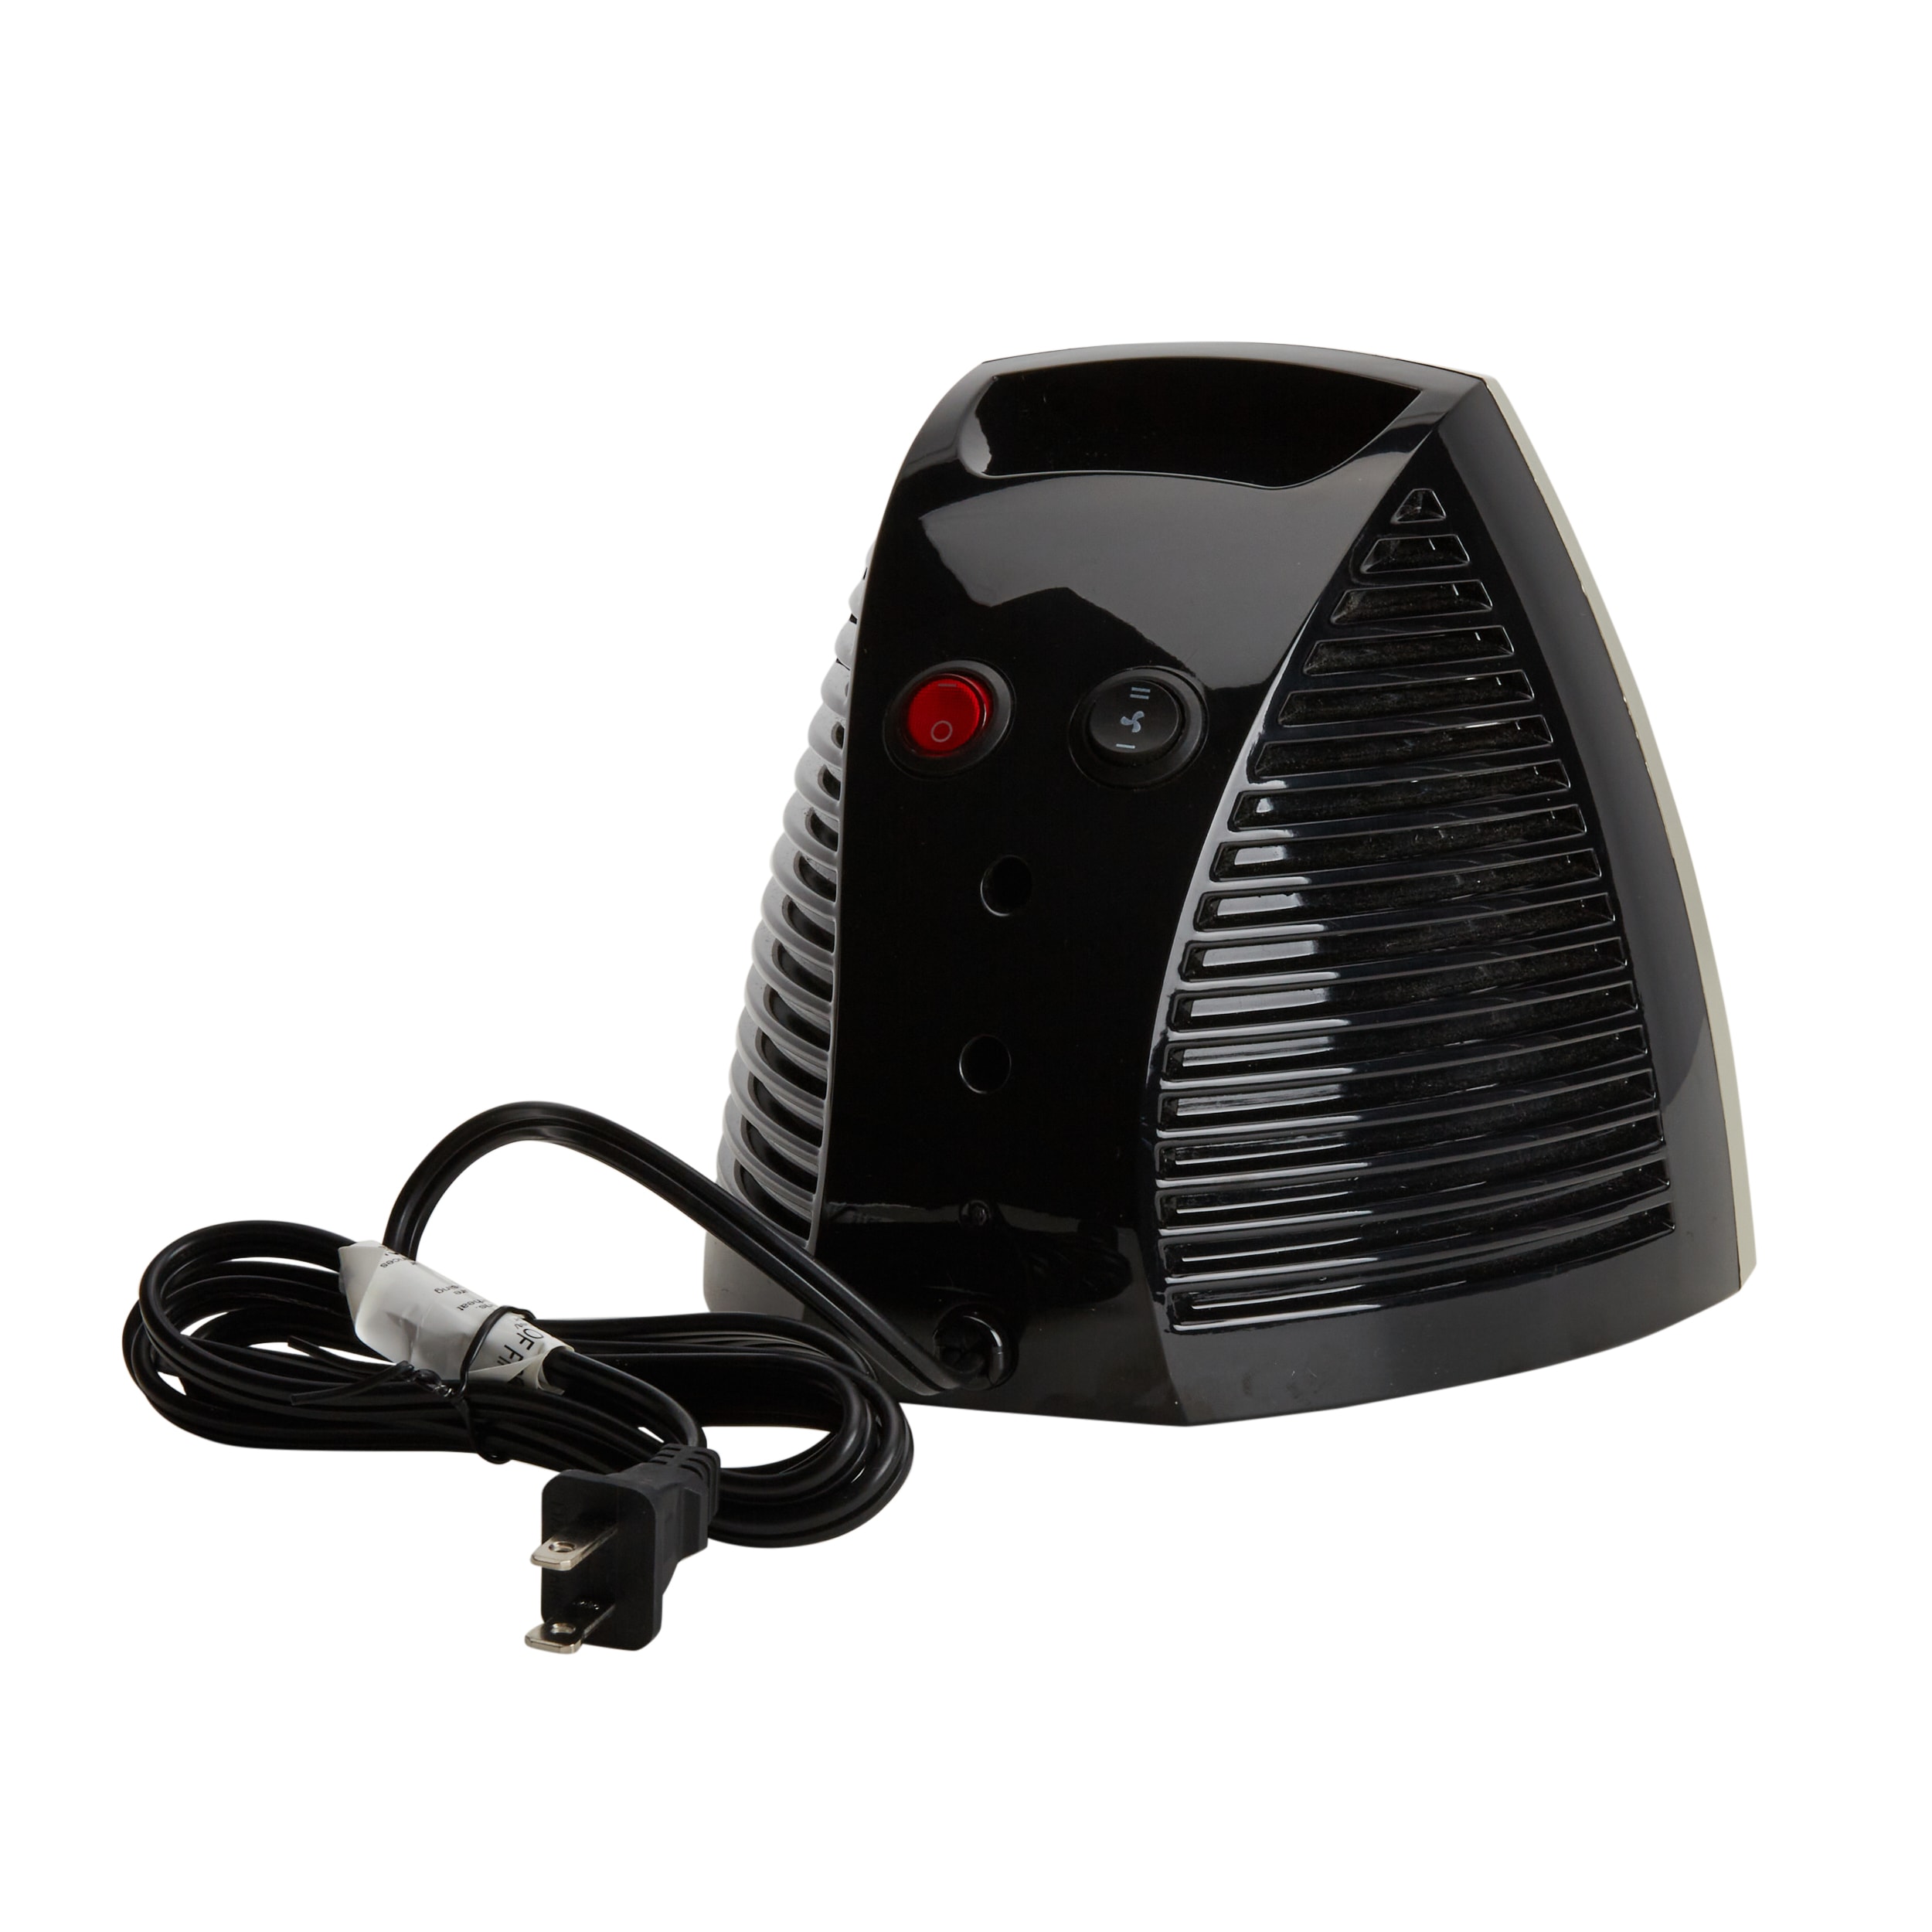 Vornado Vh202 Personal Indoor Space Heater Black : Target